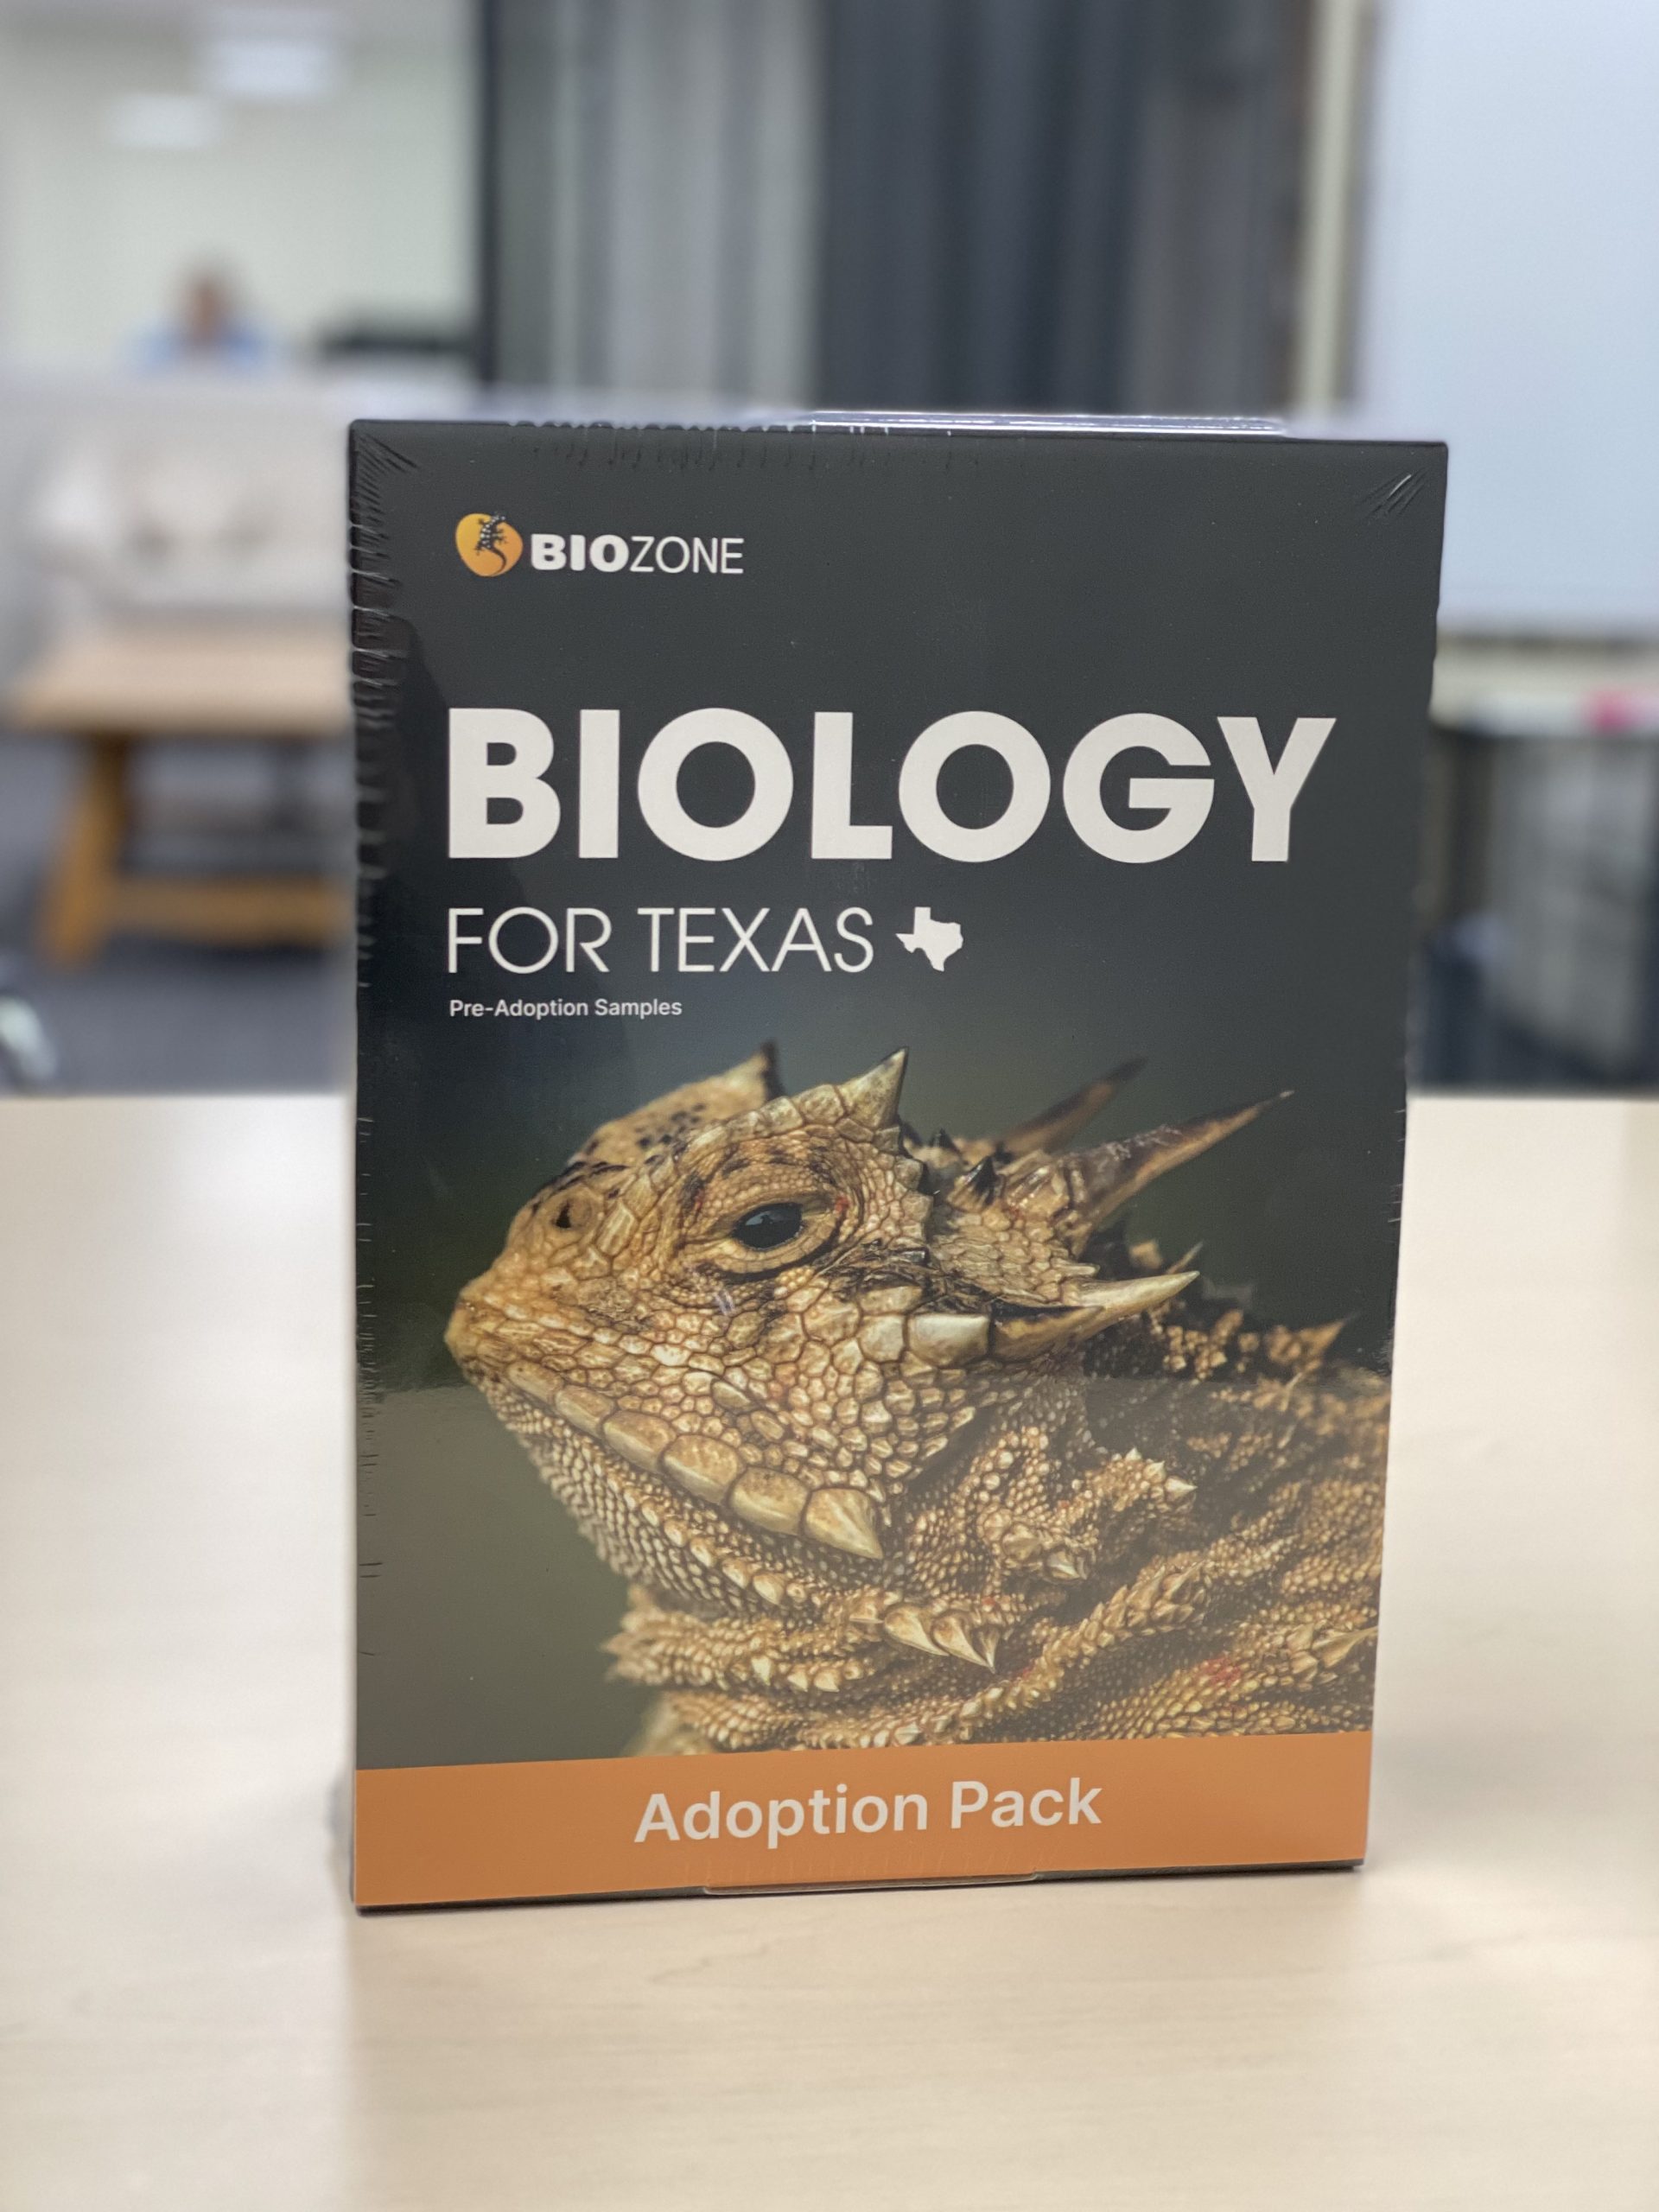 texas adoption pack for BIOZONE